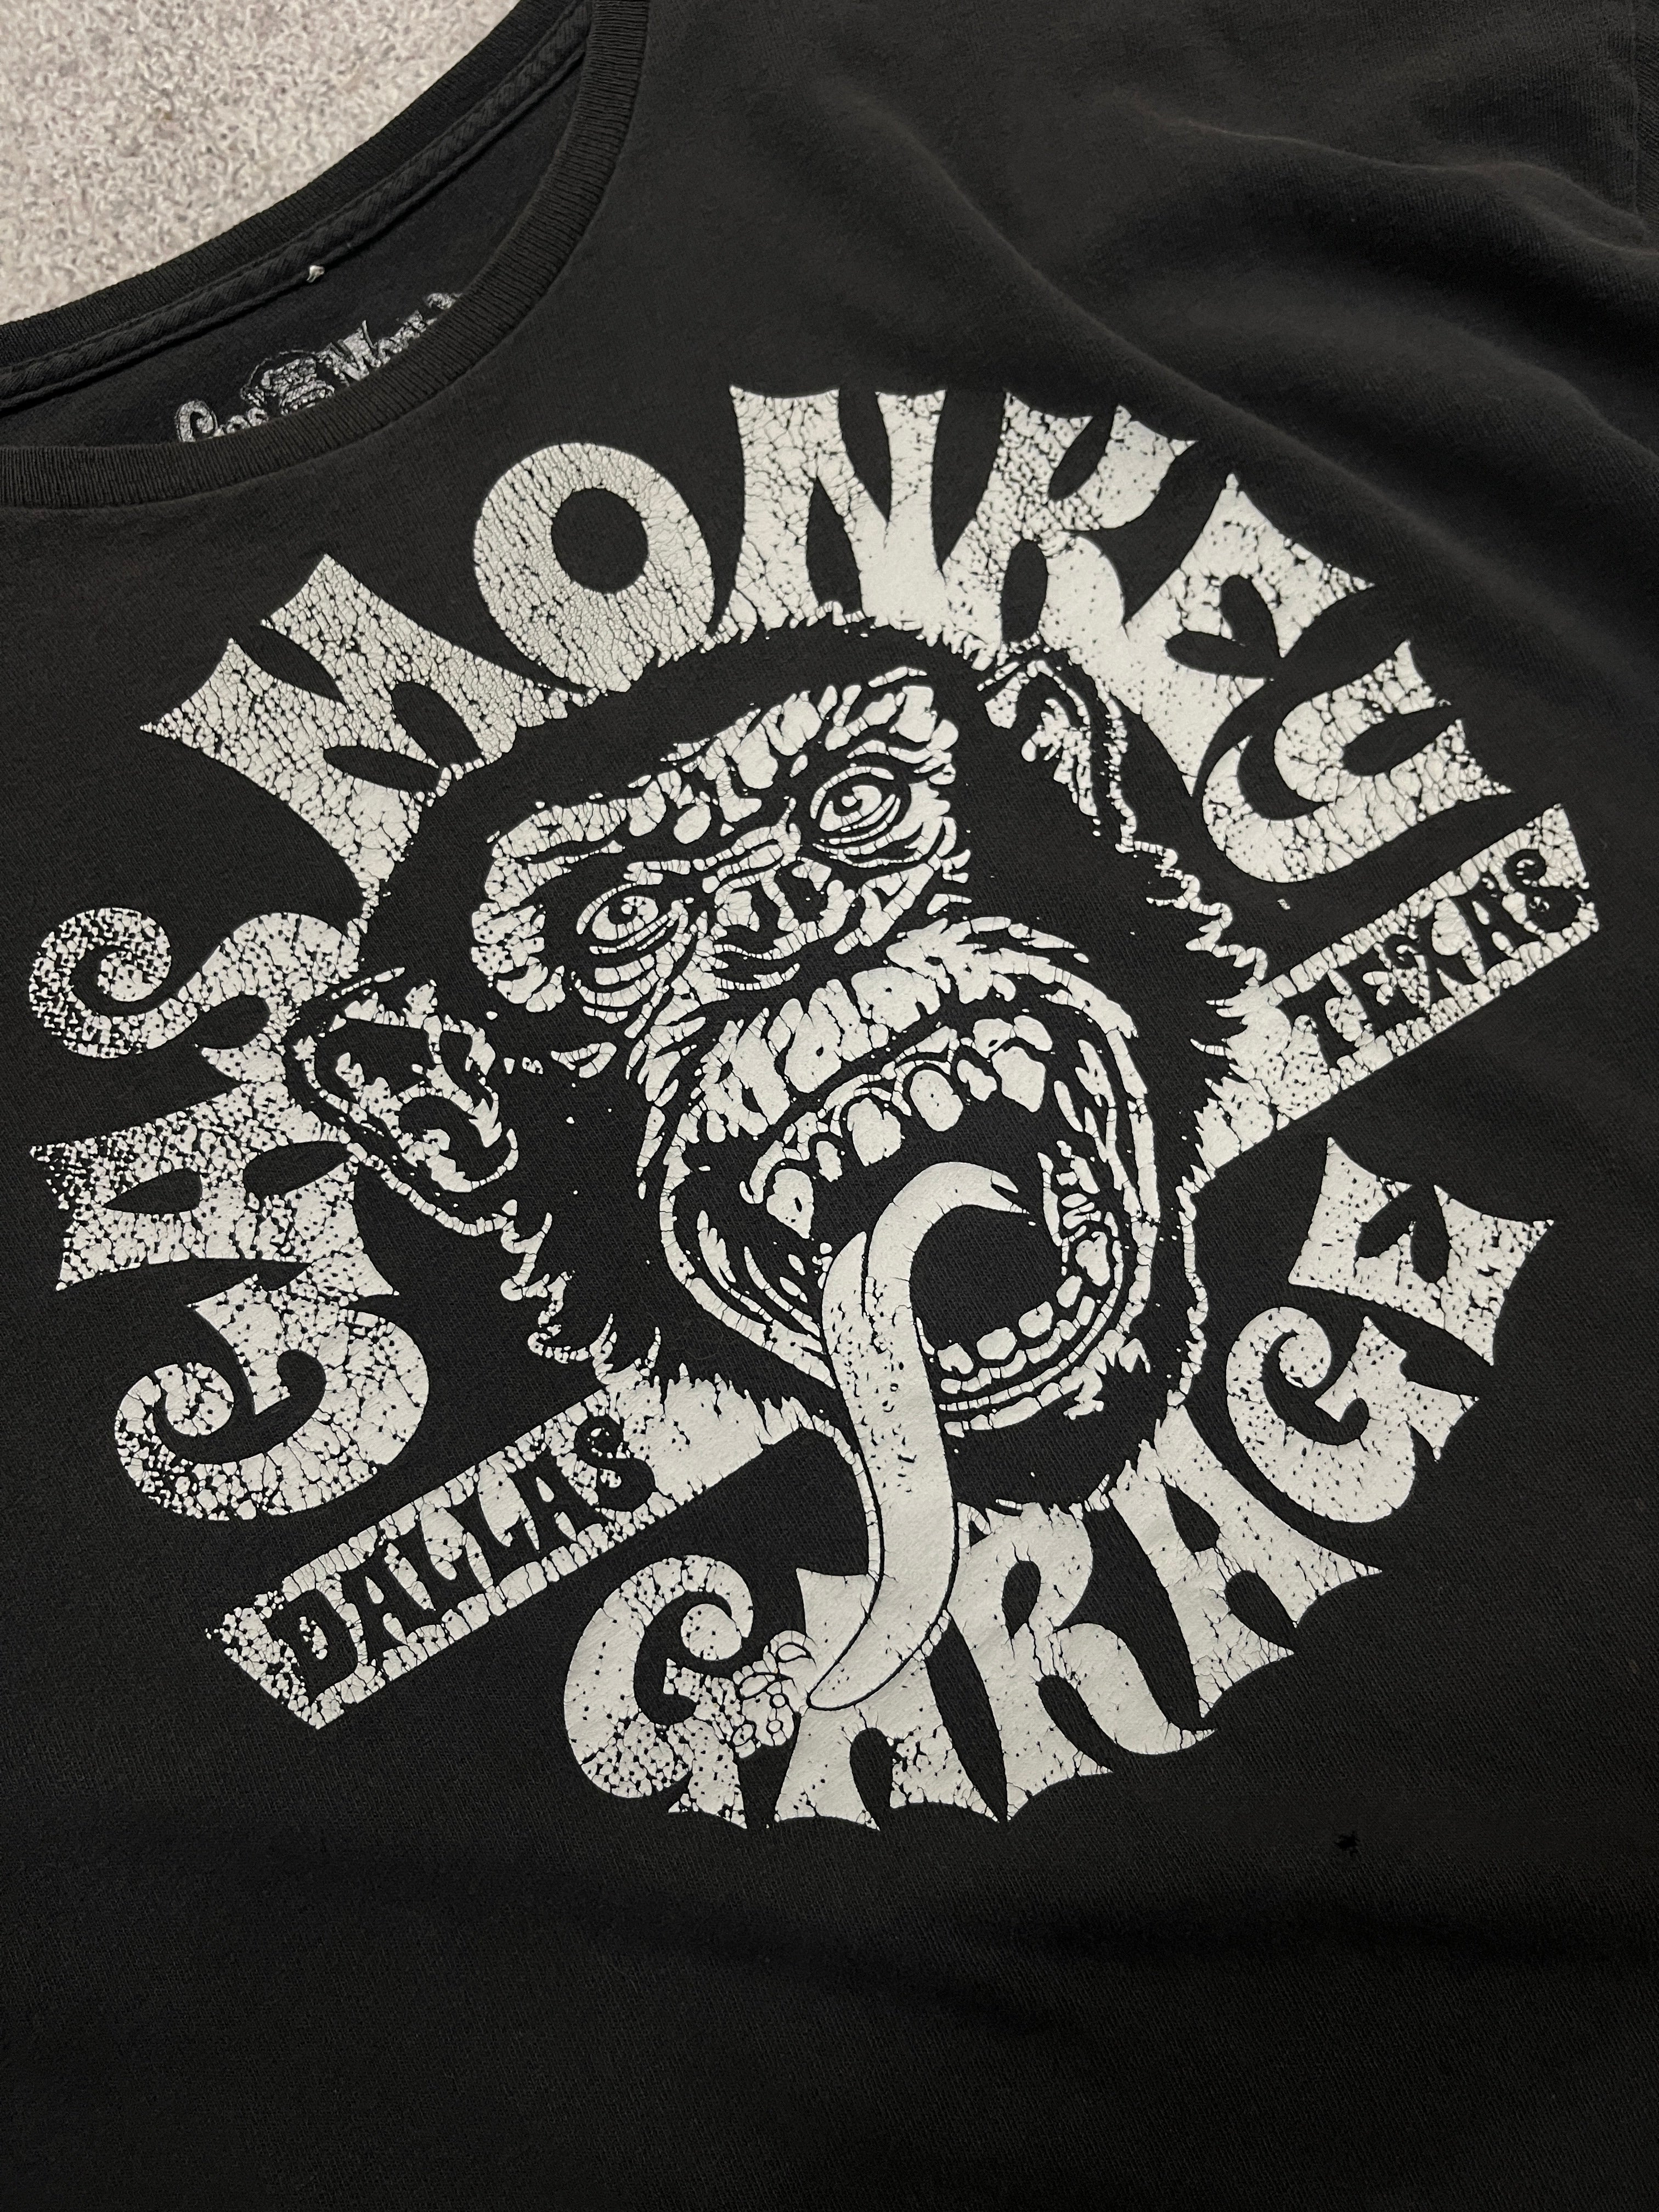 Vintage Gas Monkey Garage TShirt Black // X-Large - RHAGHOUSE VINTAGE